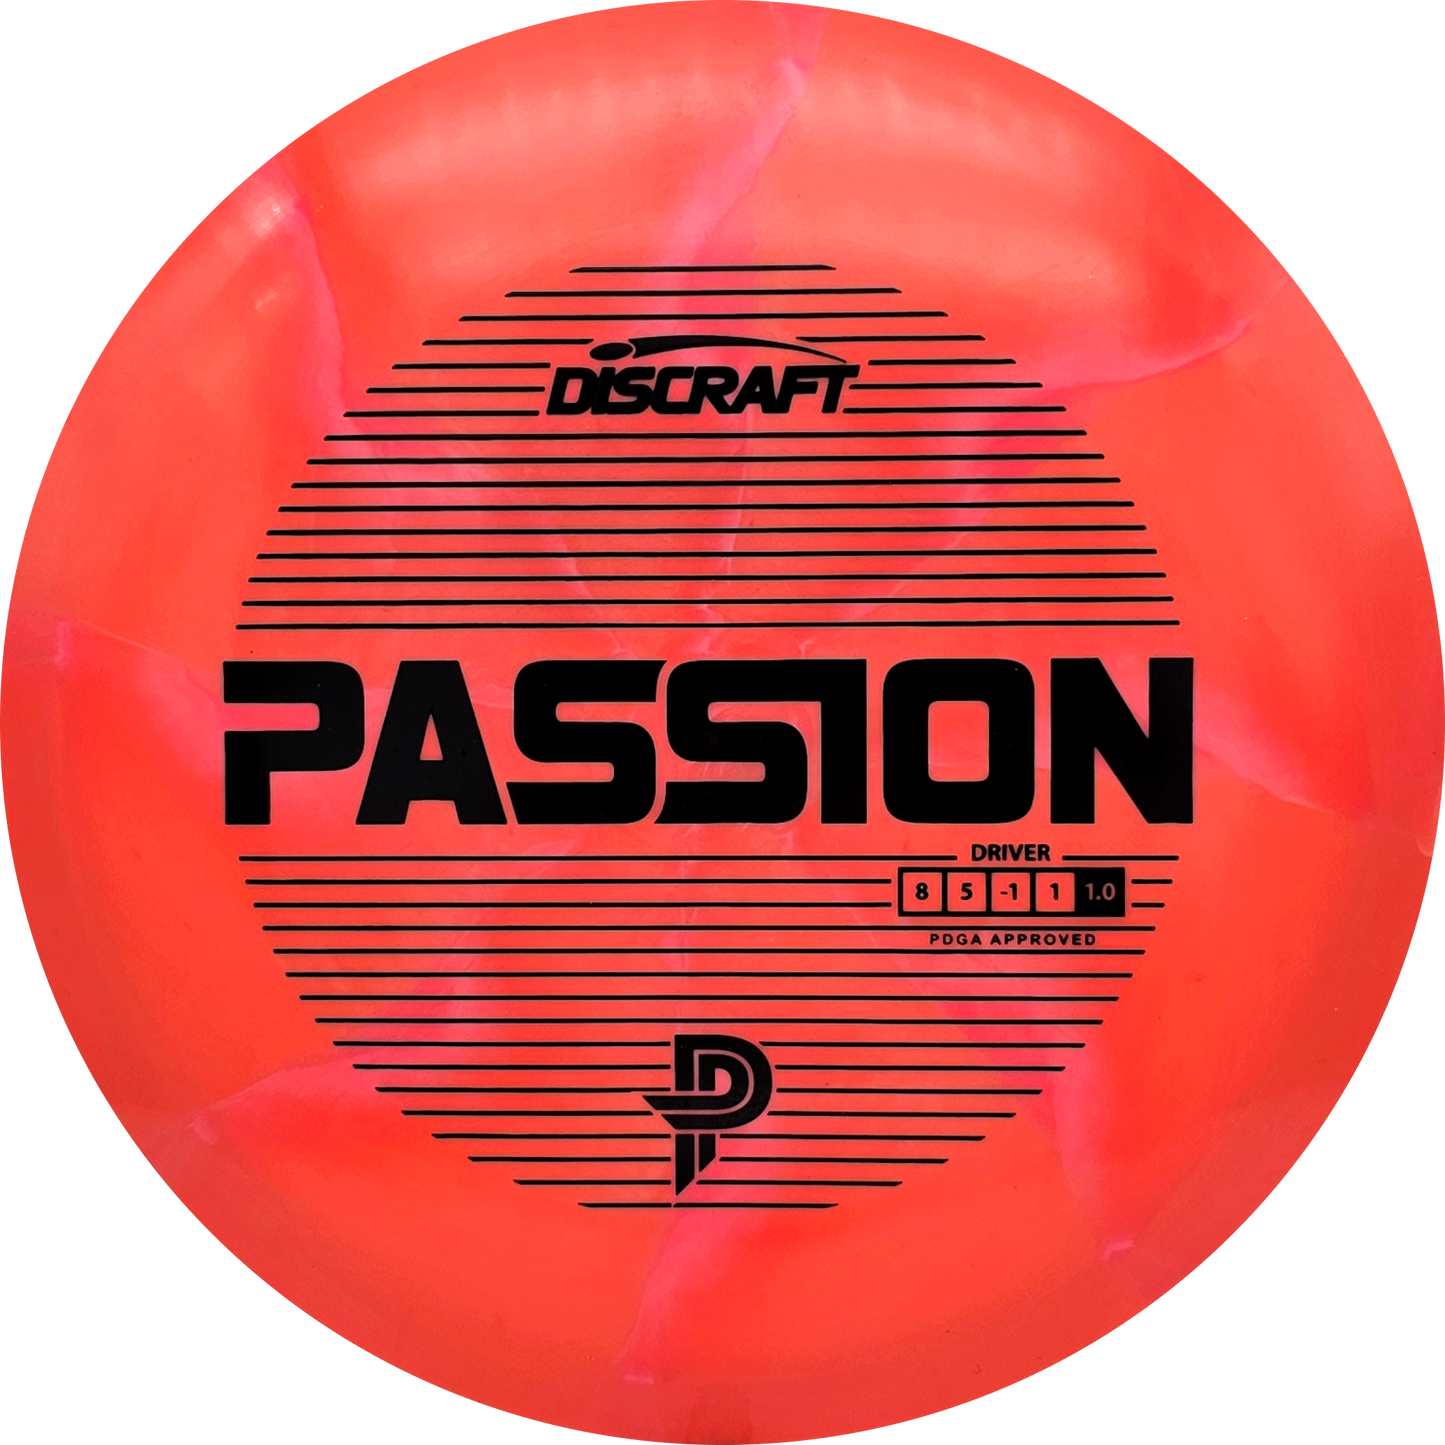 Discraft ESP Passion - Paige Pierce